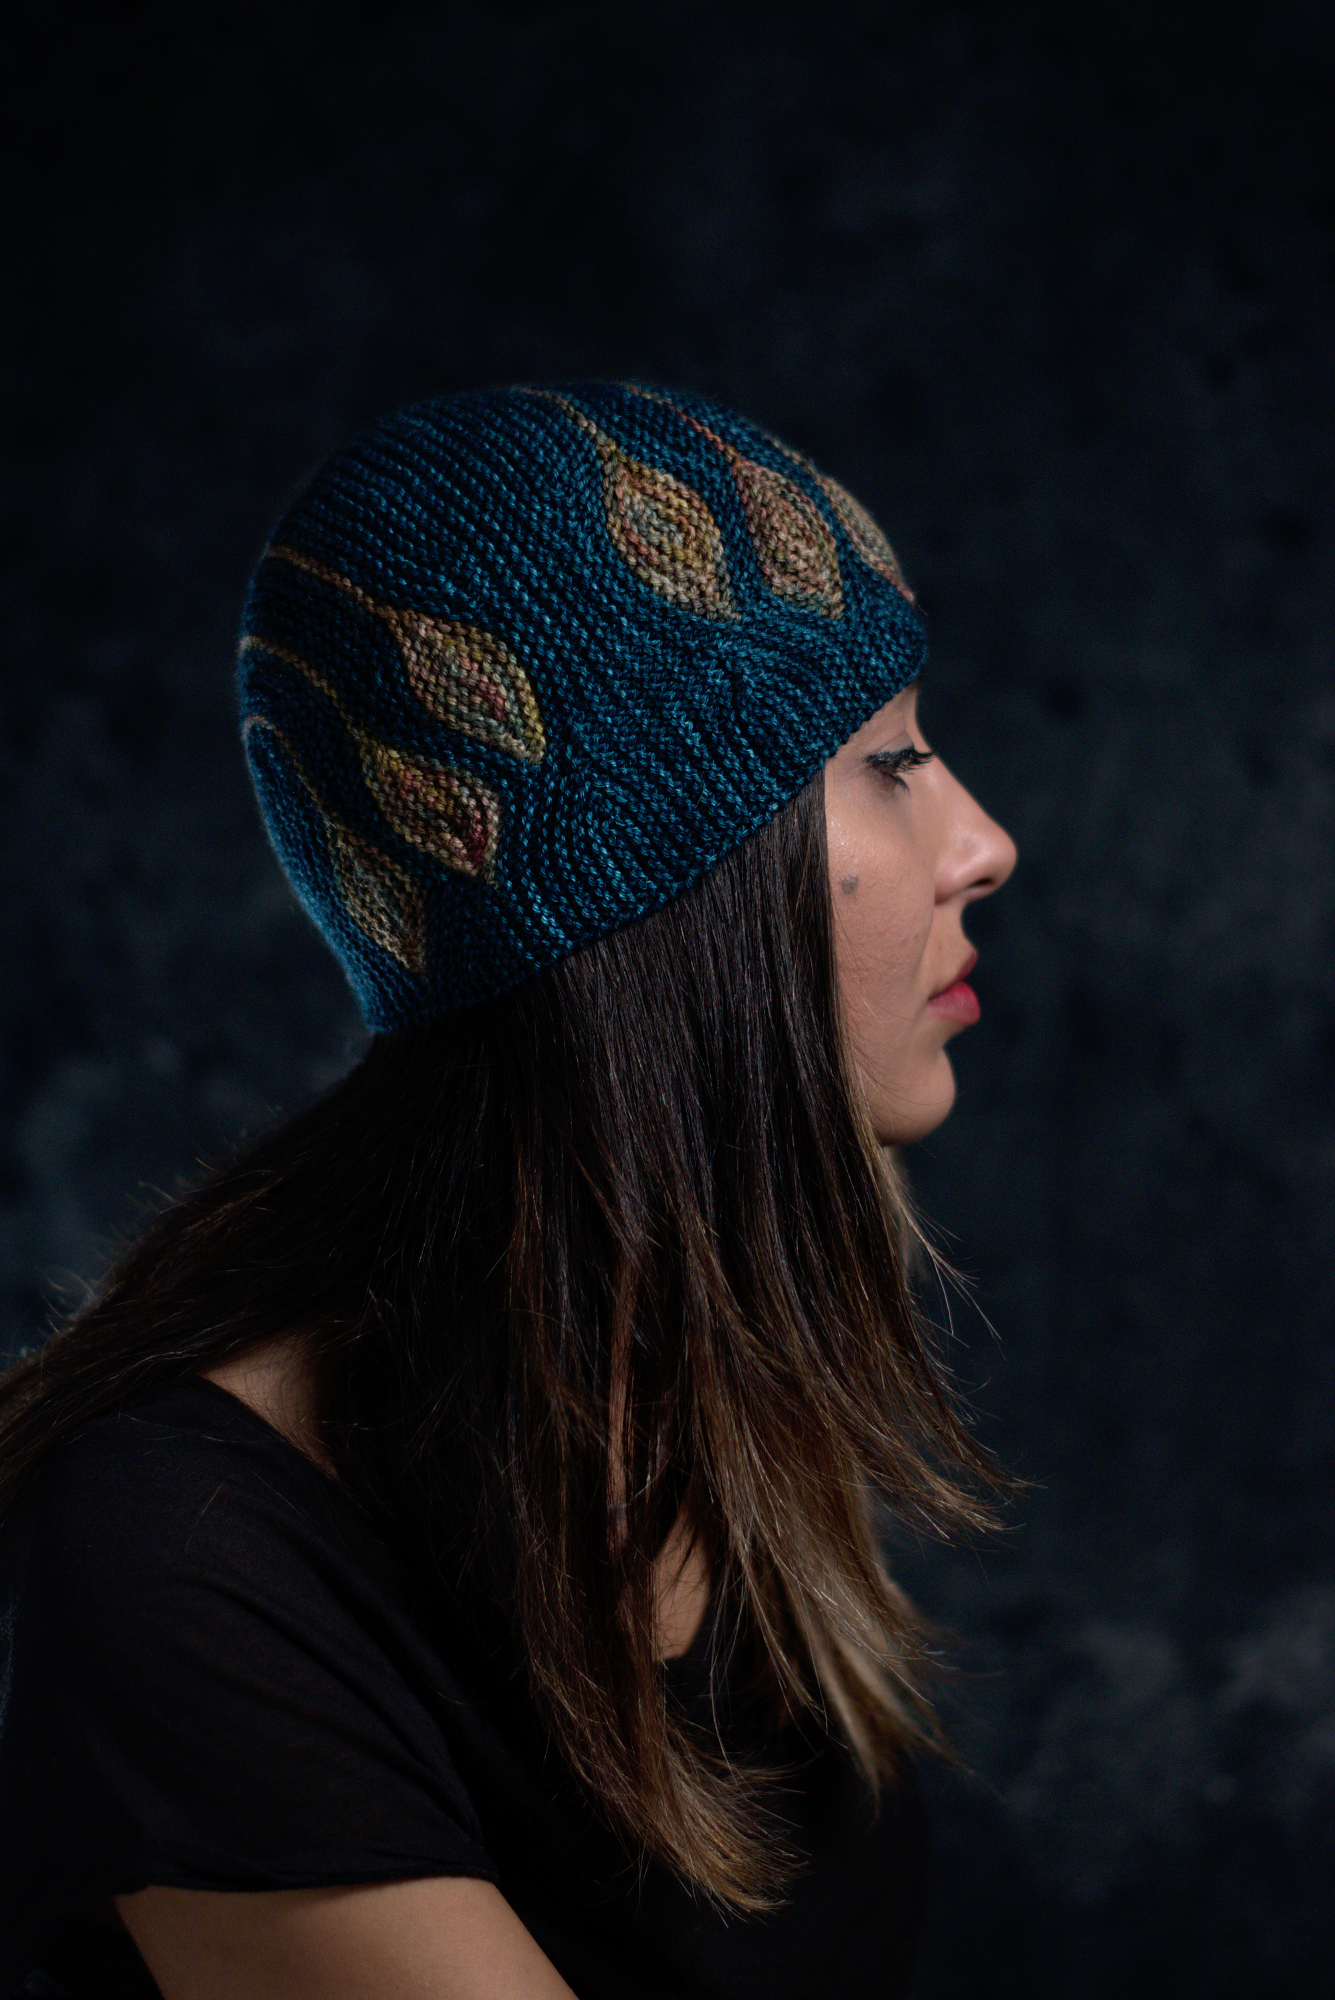 Chiral sideways knit short row hat knitting pattern